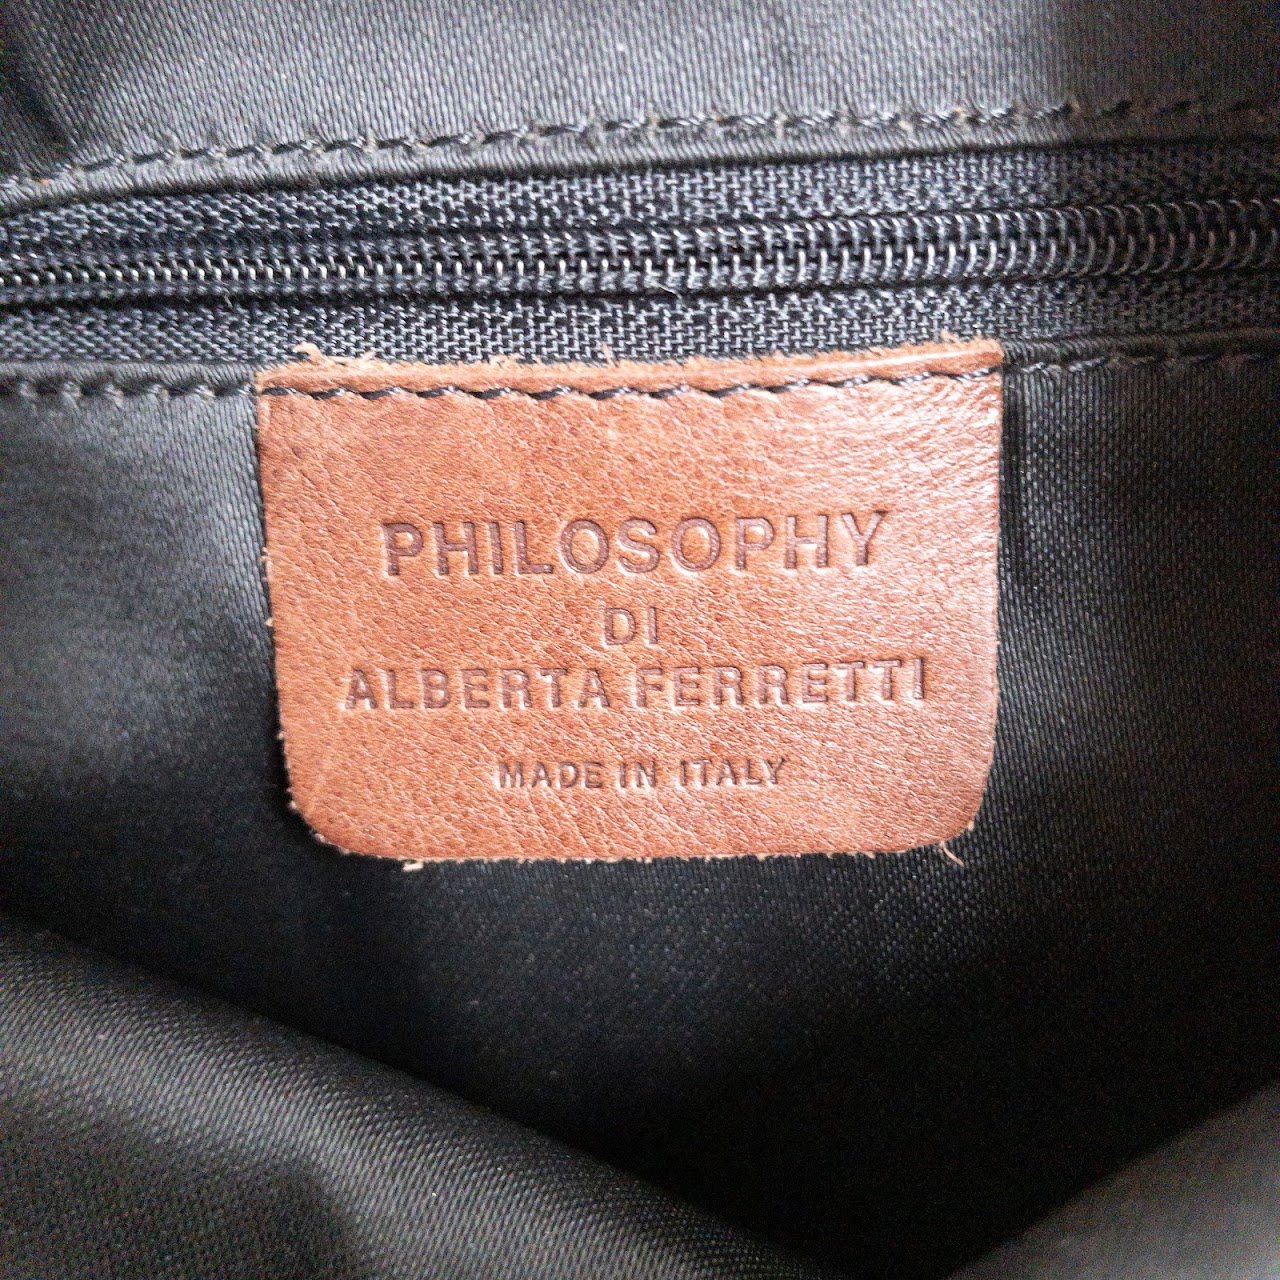 Philosophy Di Alberta Ferretti Fur Bag